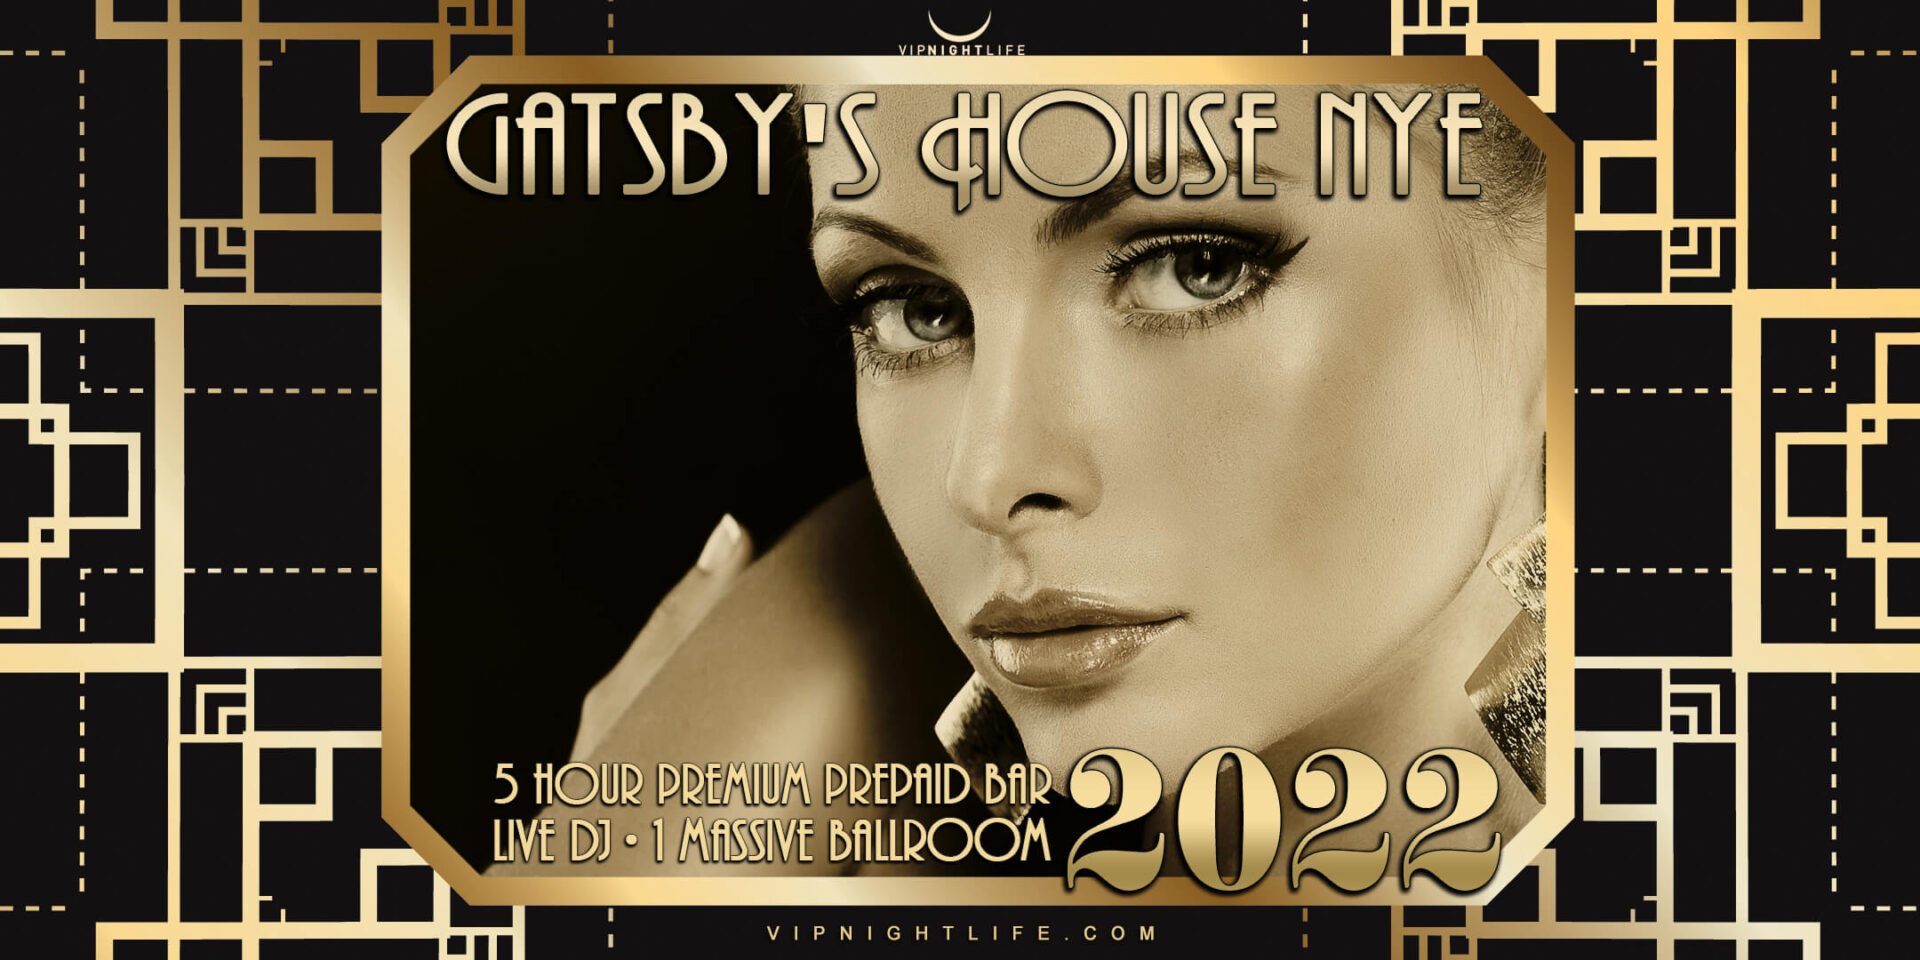 2022 Cincinnati New Year's Eve Party Gatsby's House VIP Nightlife